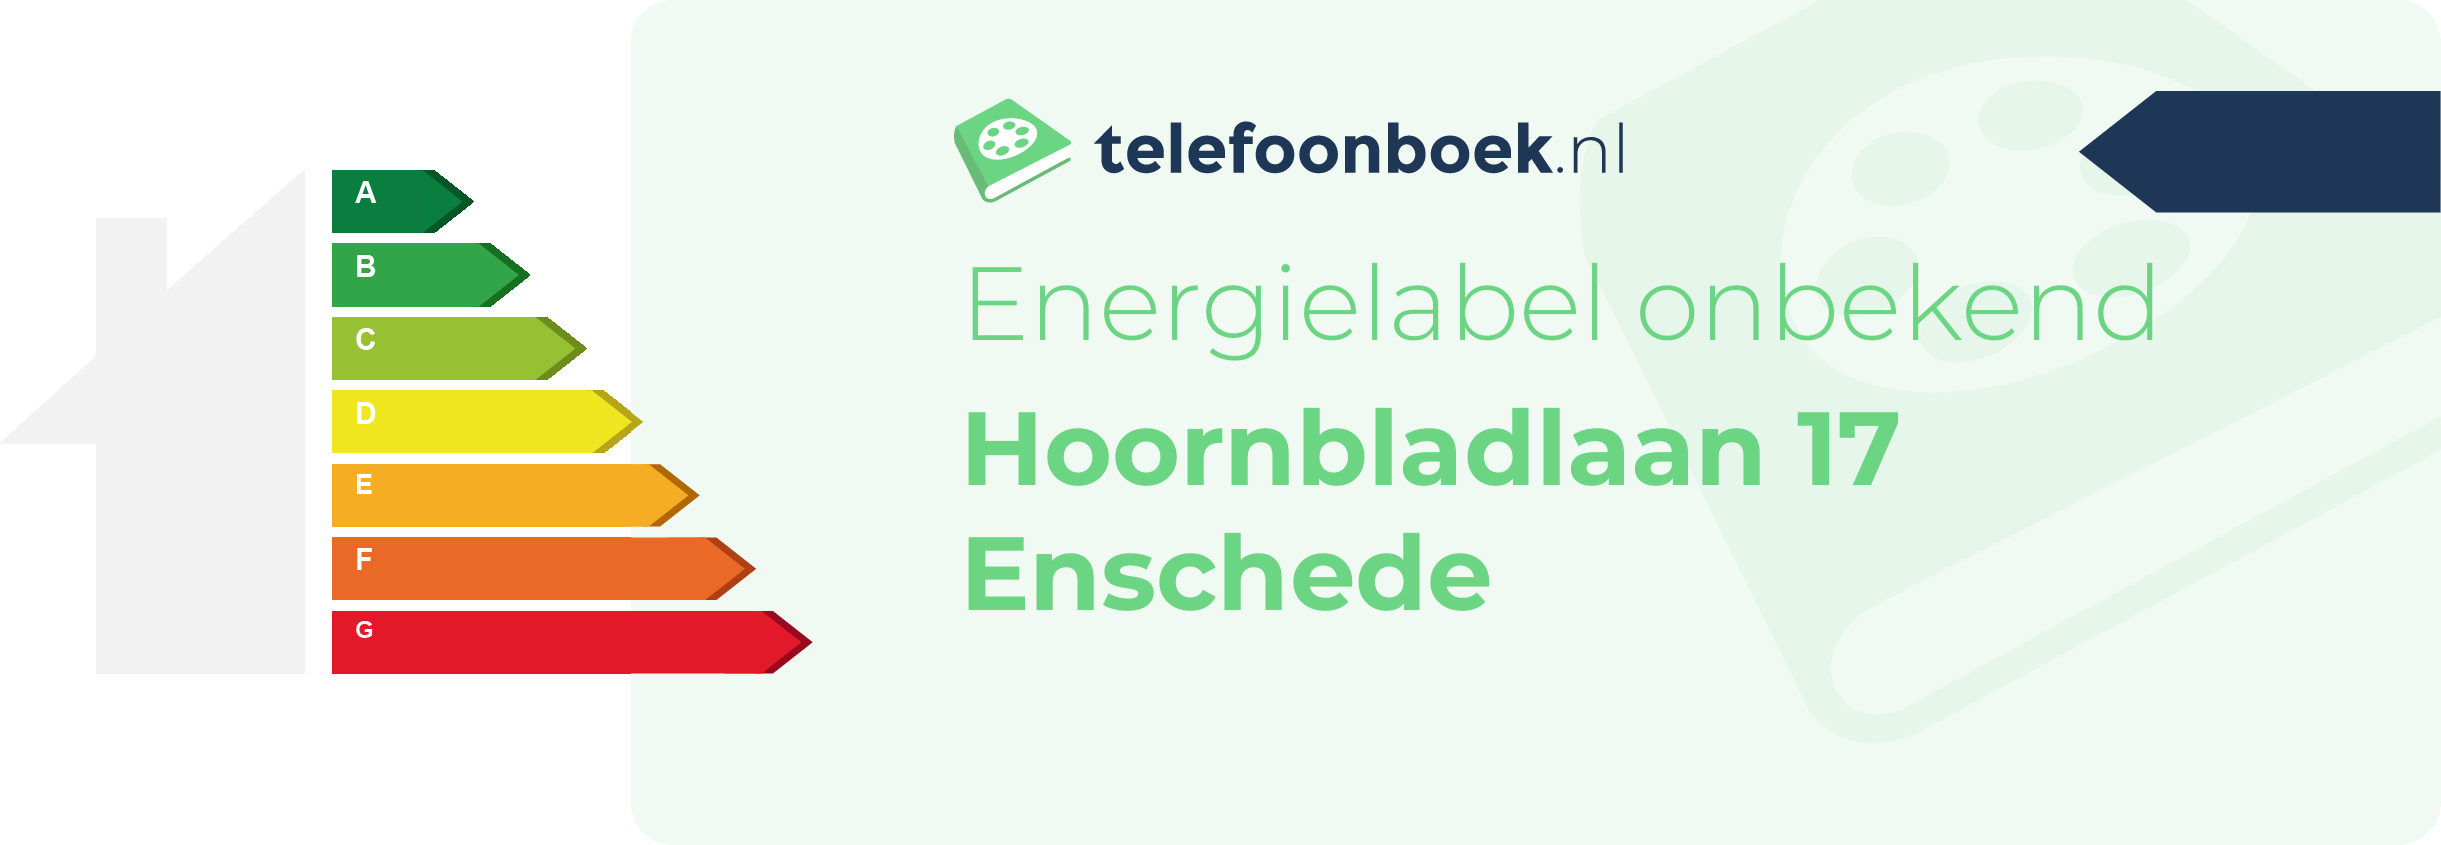 Energielabel Hoornbladlaan 17 Enschede